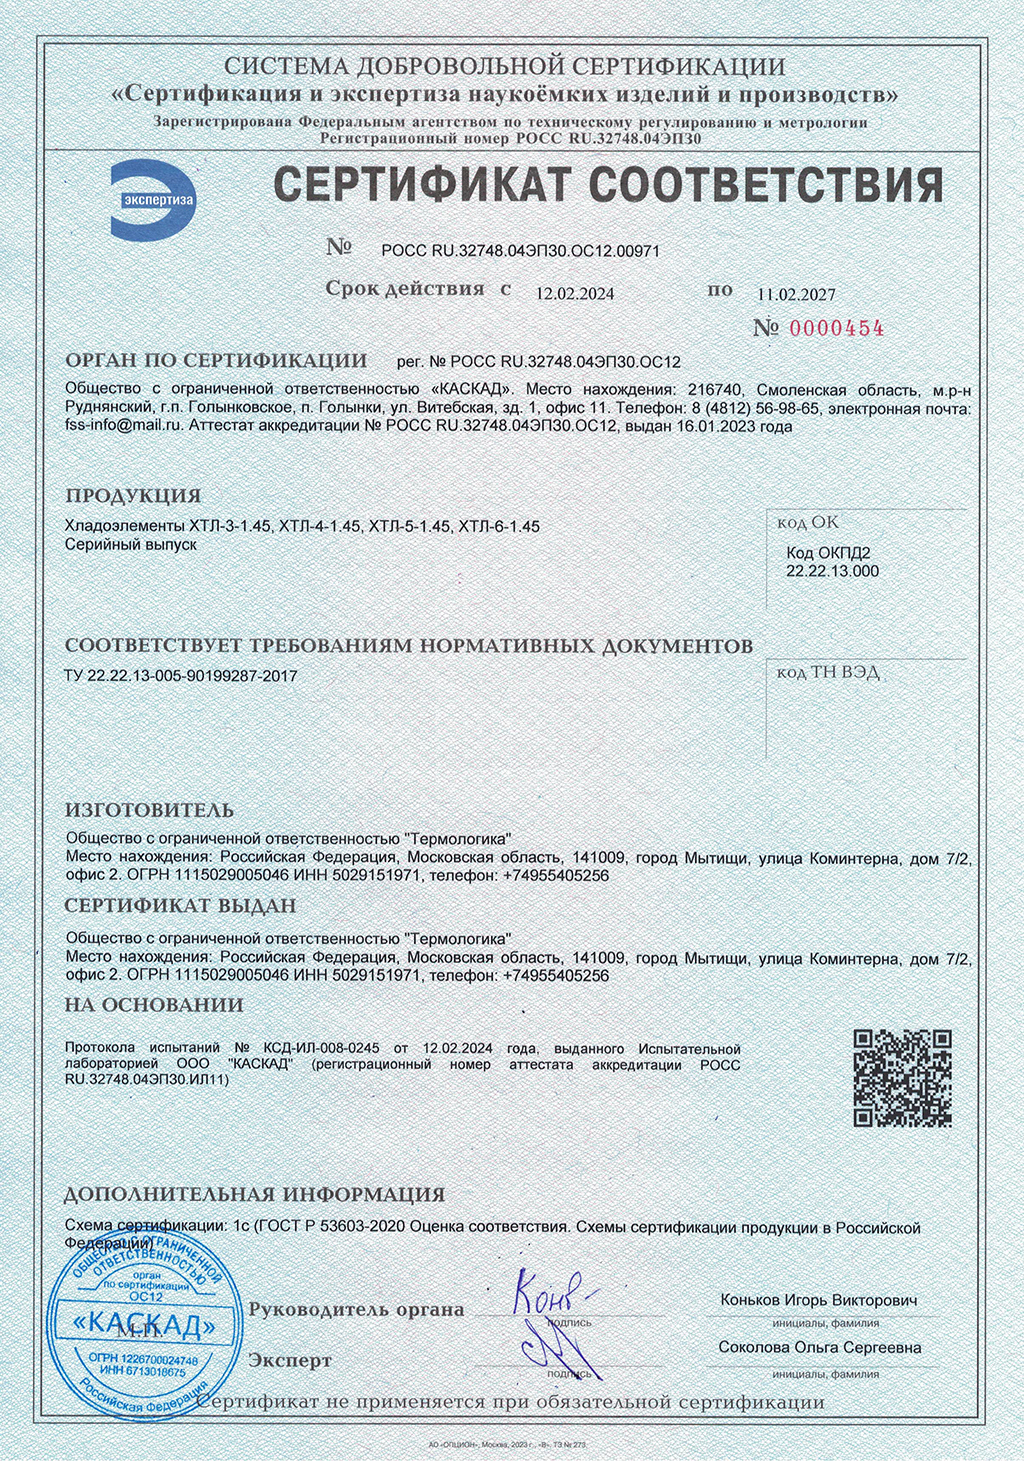 Сертификат хладоэлементы Термологика ХТЛ-3-1.45, ХТЛ-4-1.45, ХТЛ-5-1.45, ХТЛ-6-1.45